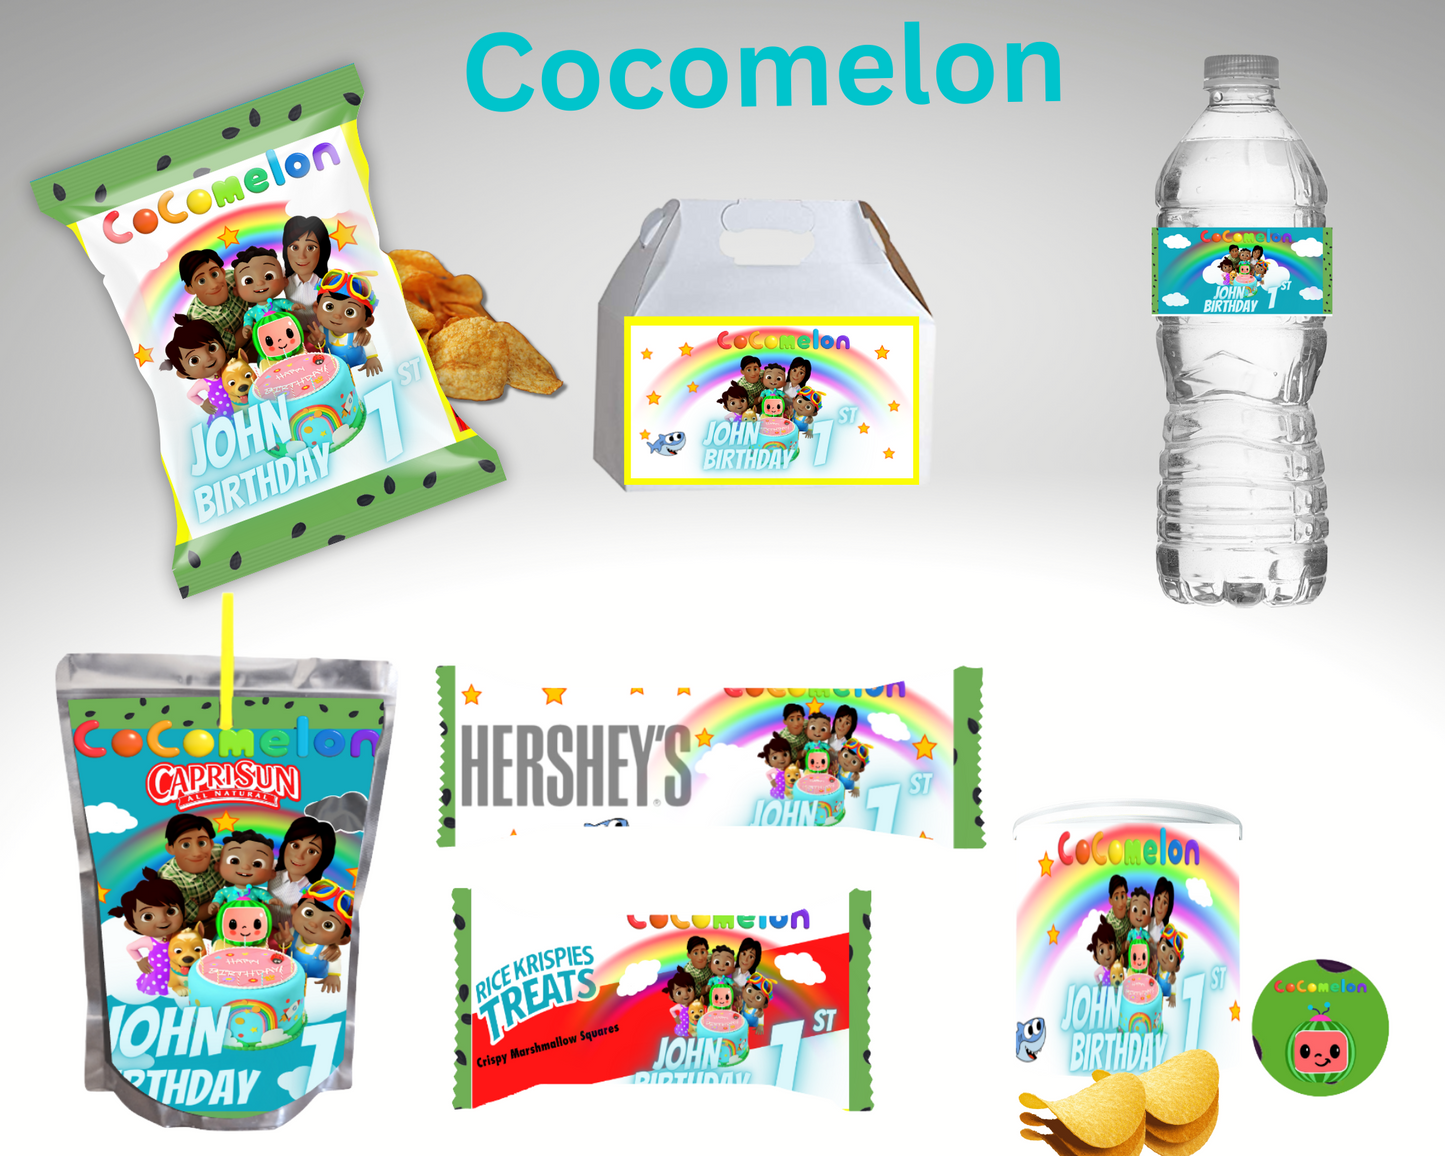 Coco Melon Bundle Party Favor Canva Design & Templates (7 editable templates and designs)